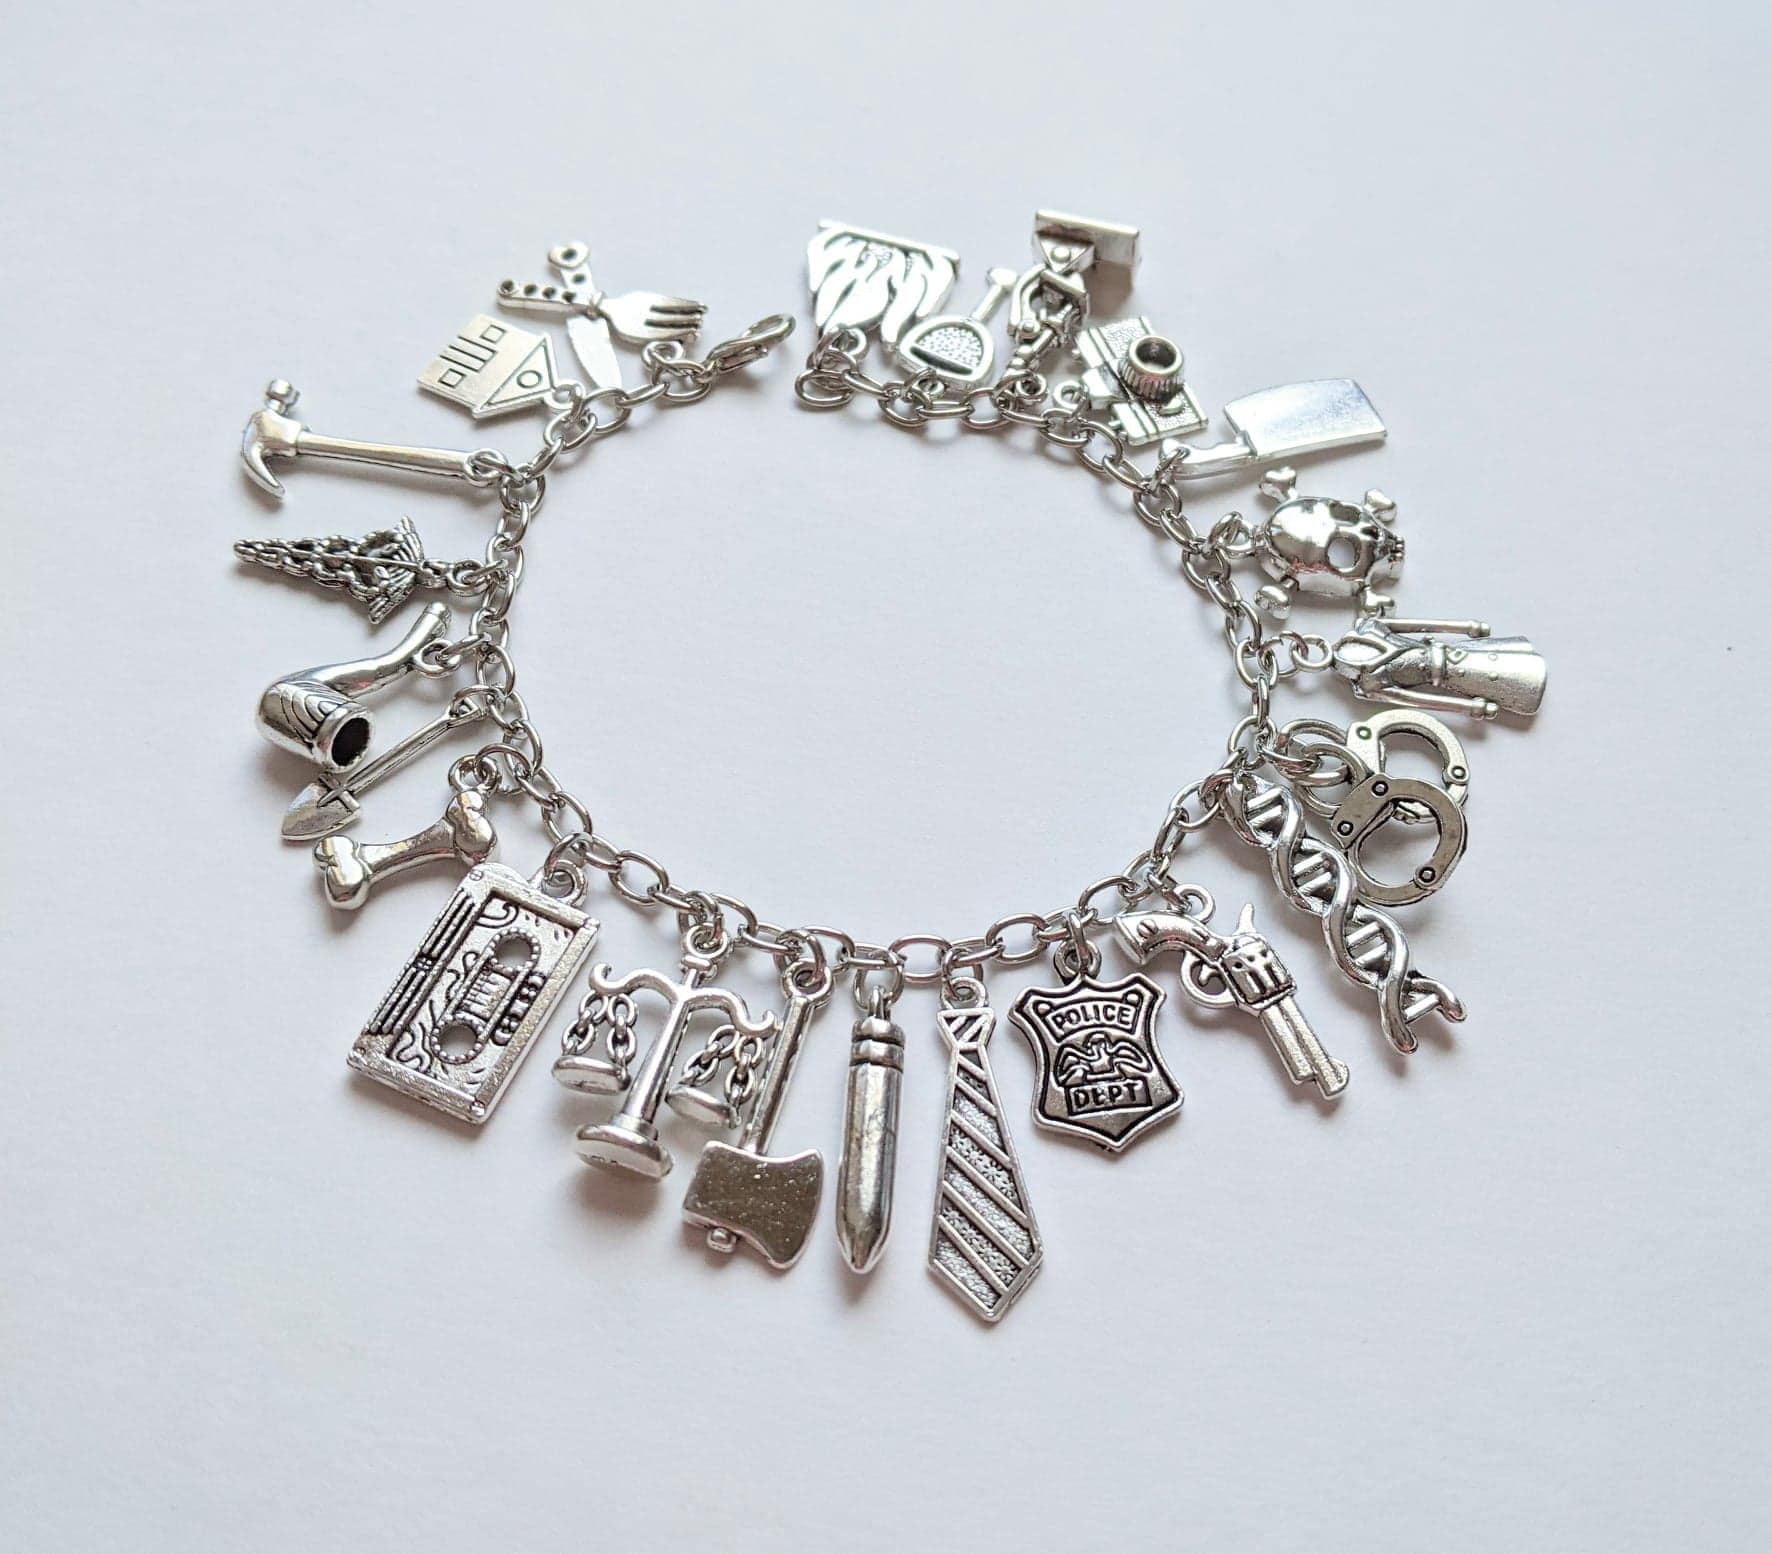 BBC Sherlock Inspired Charm Bracelet